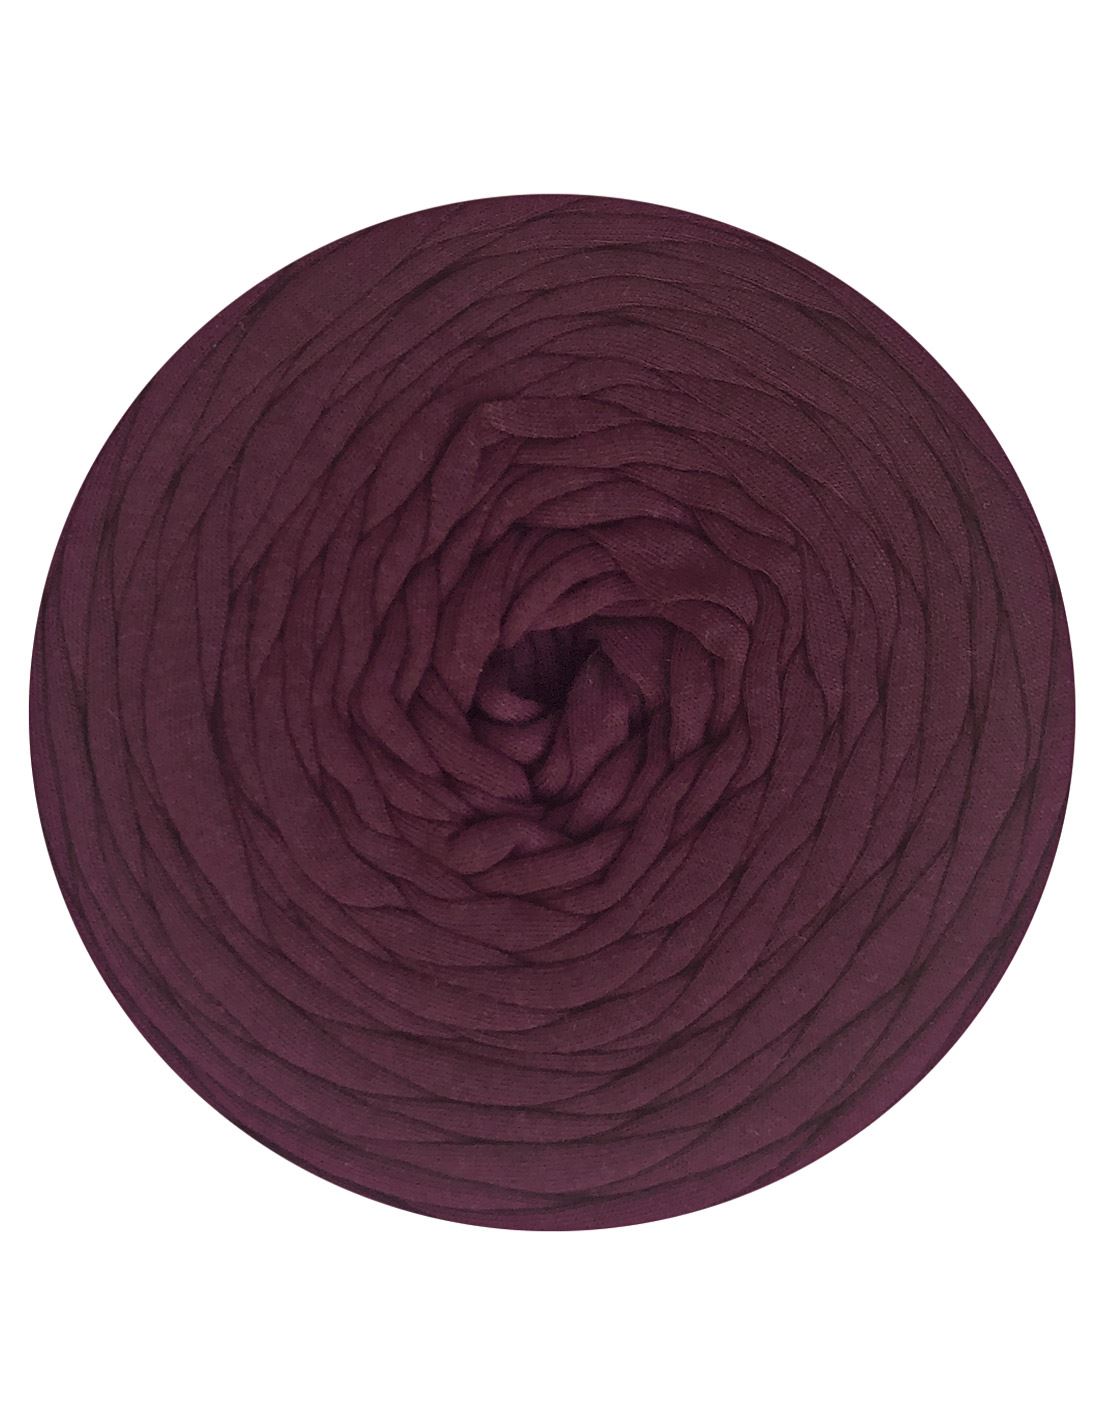 Plum purple t-shirt yarn (100-120m)